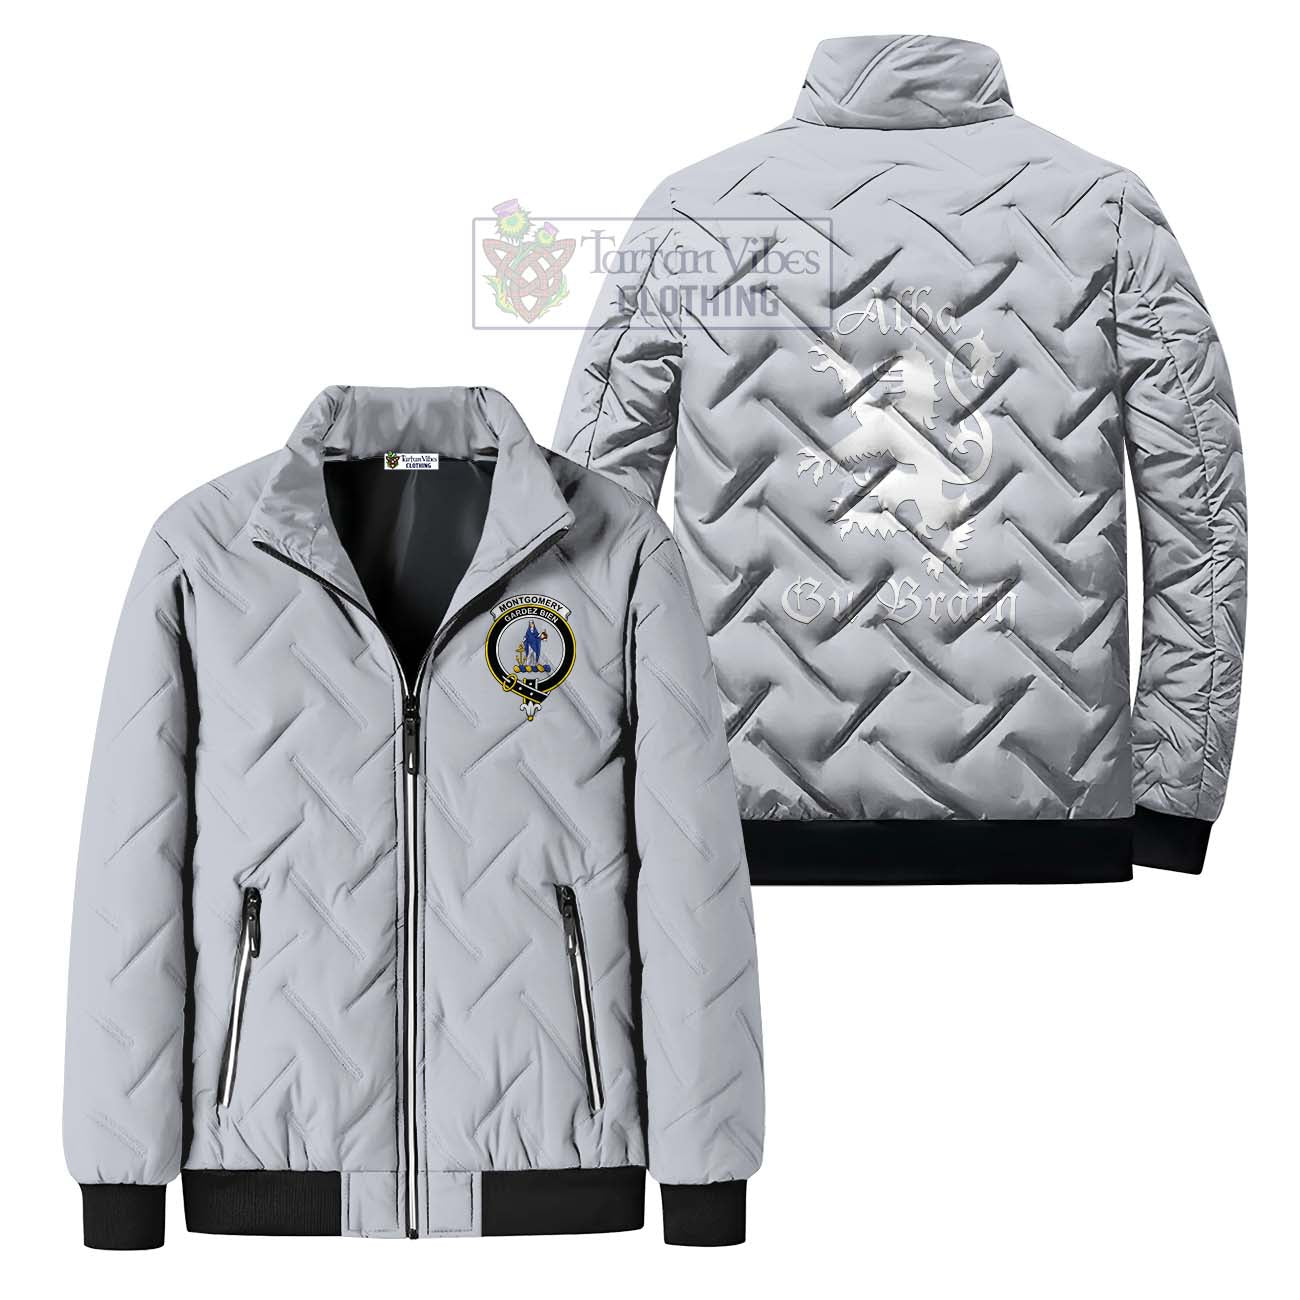 Tartan Vibes Clothing Montgomery Family Crest Padded Cotton Jacket Lion Rampant Alba Gu Brath Style